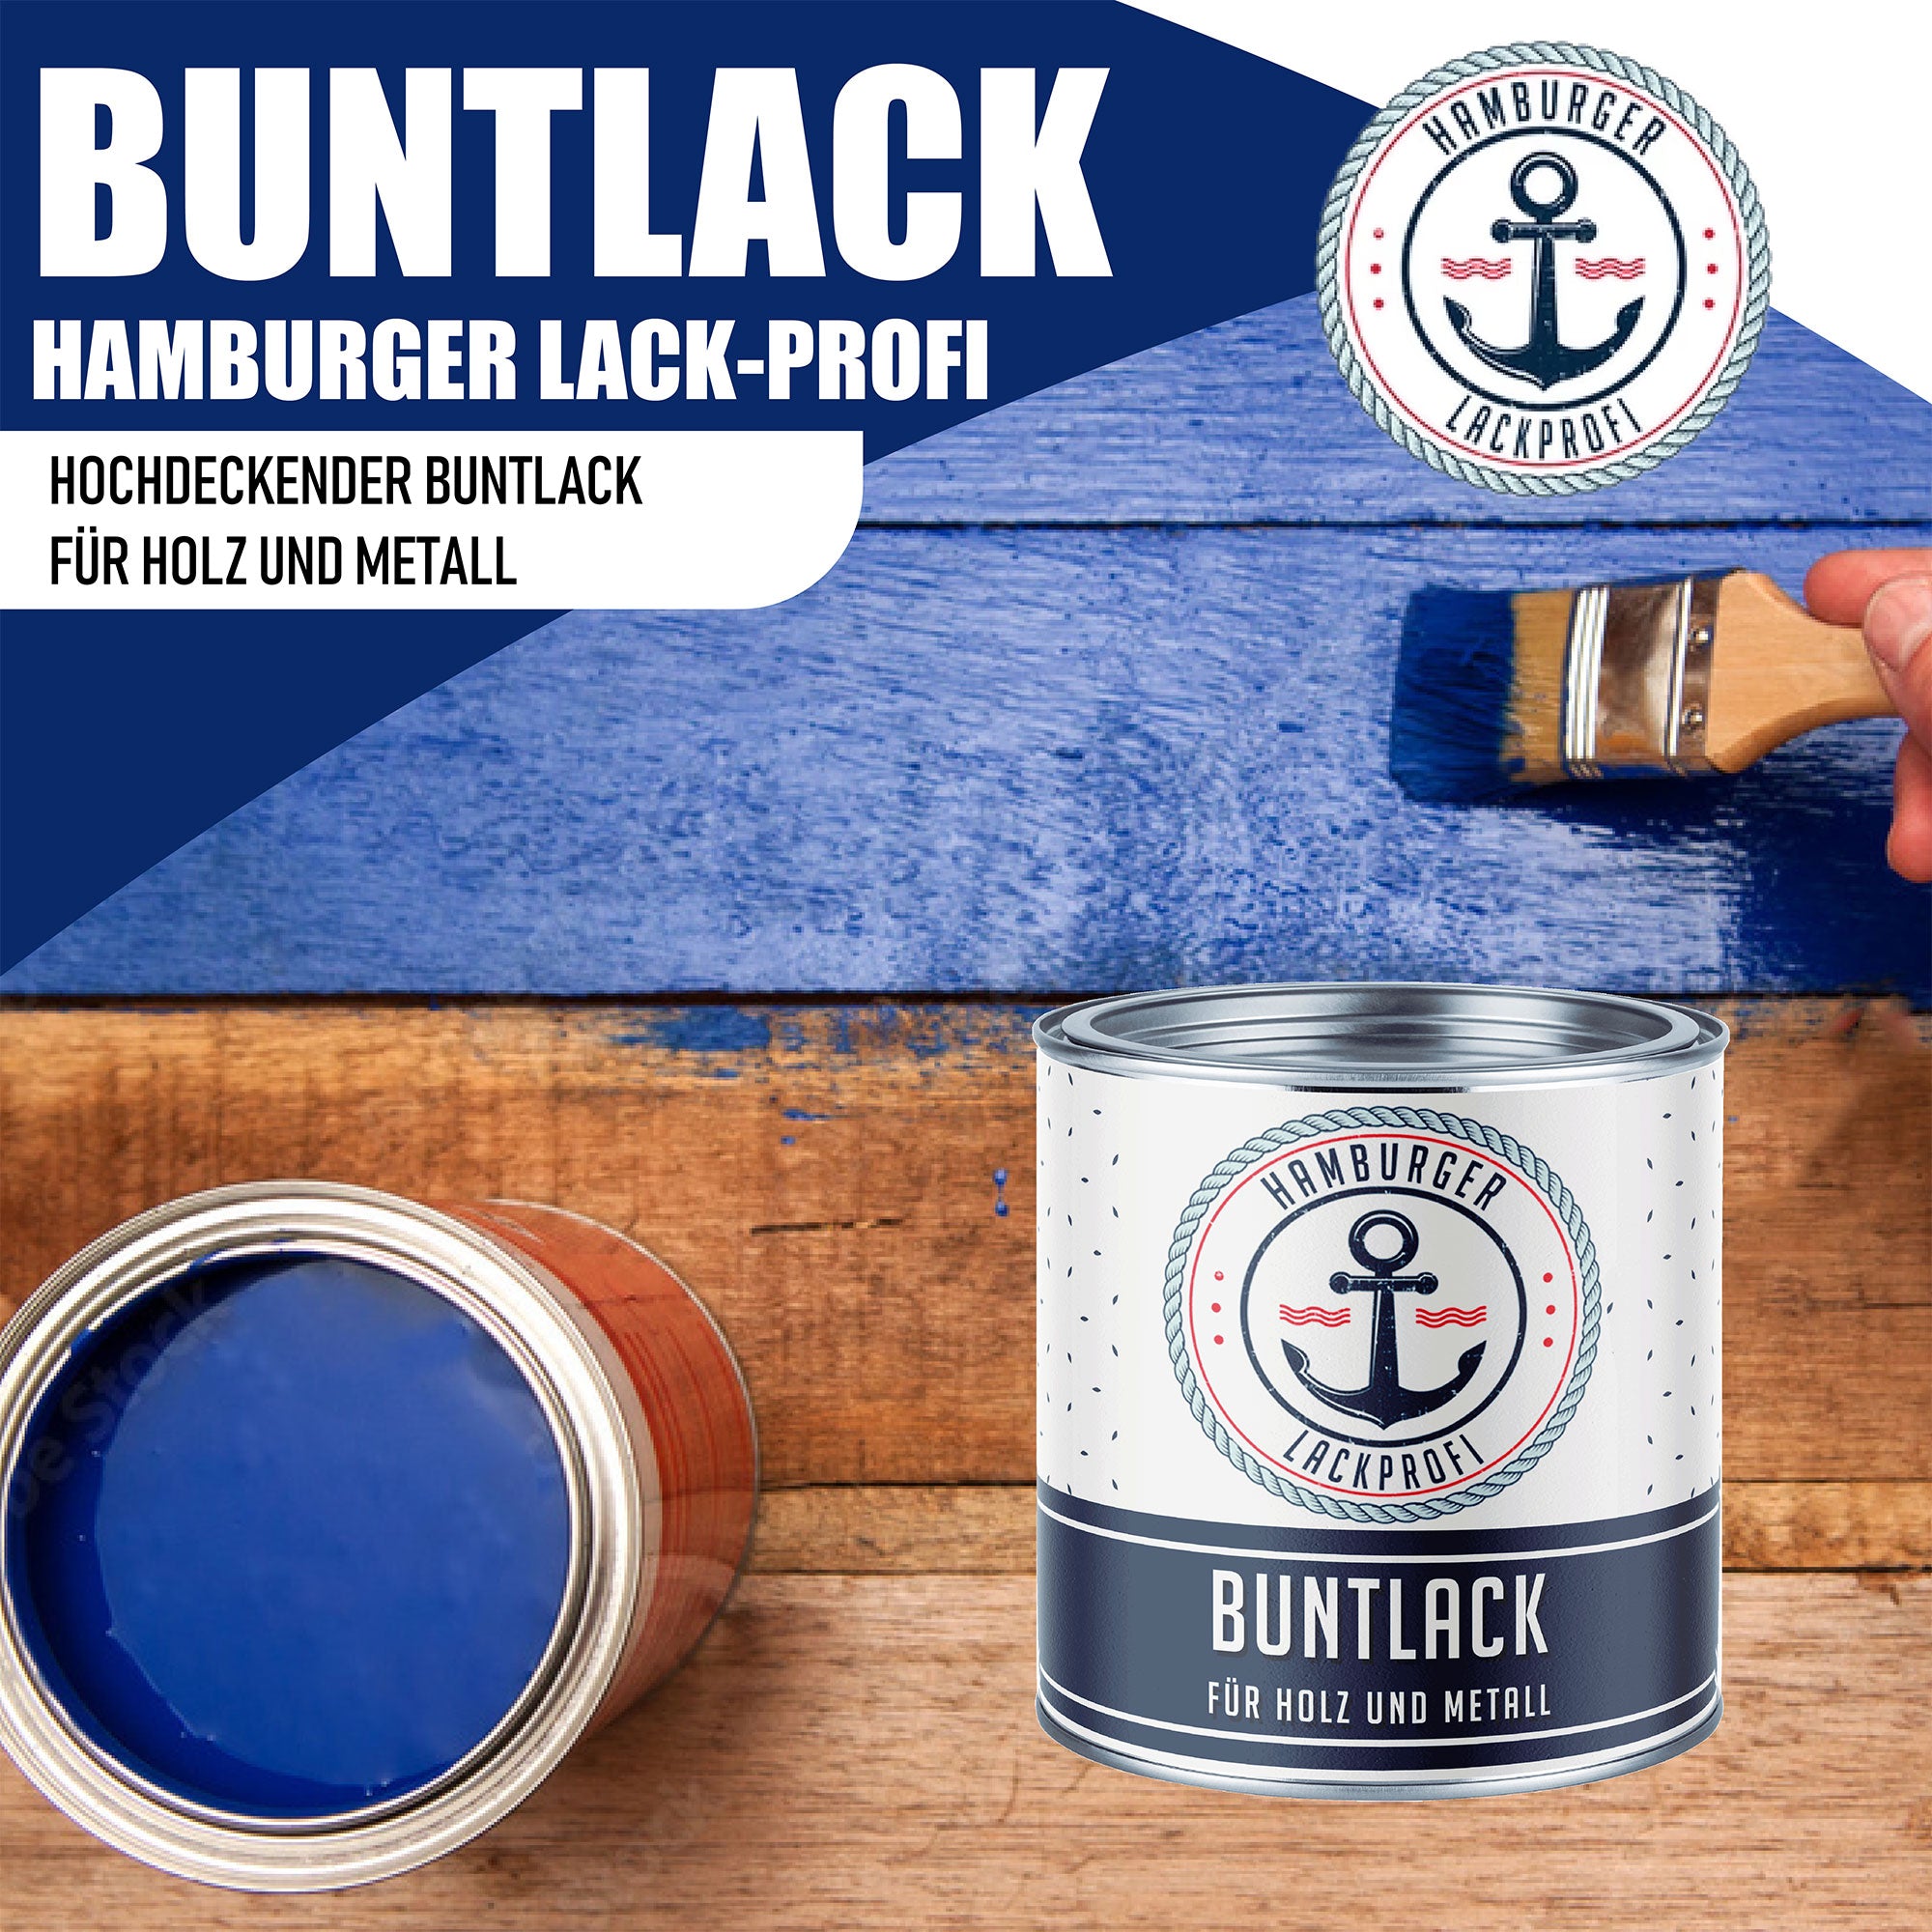 Hamburger Lack-Profi Buntlack Schwarzgrün RAL 6012 - Robuster Kunstharzlack